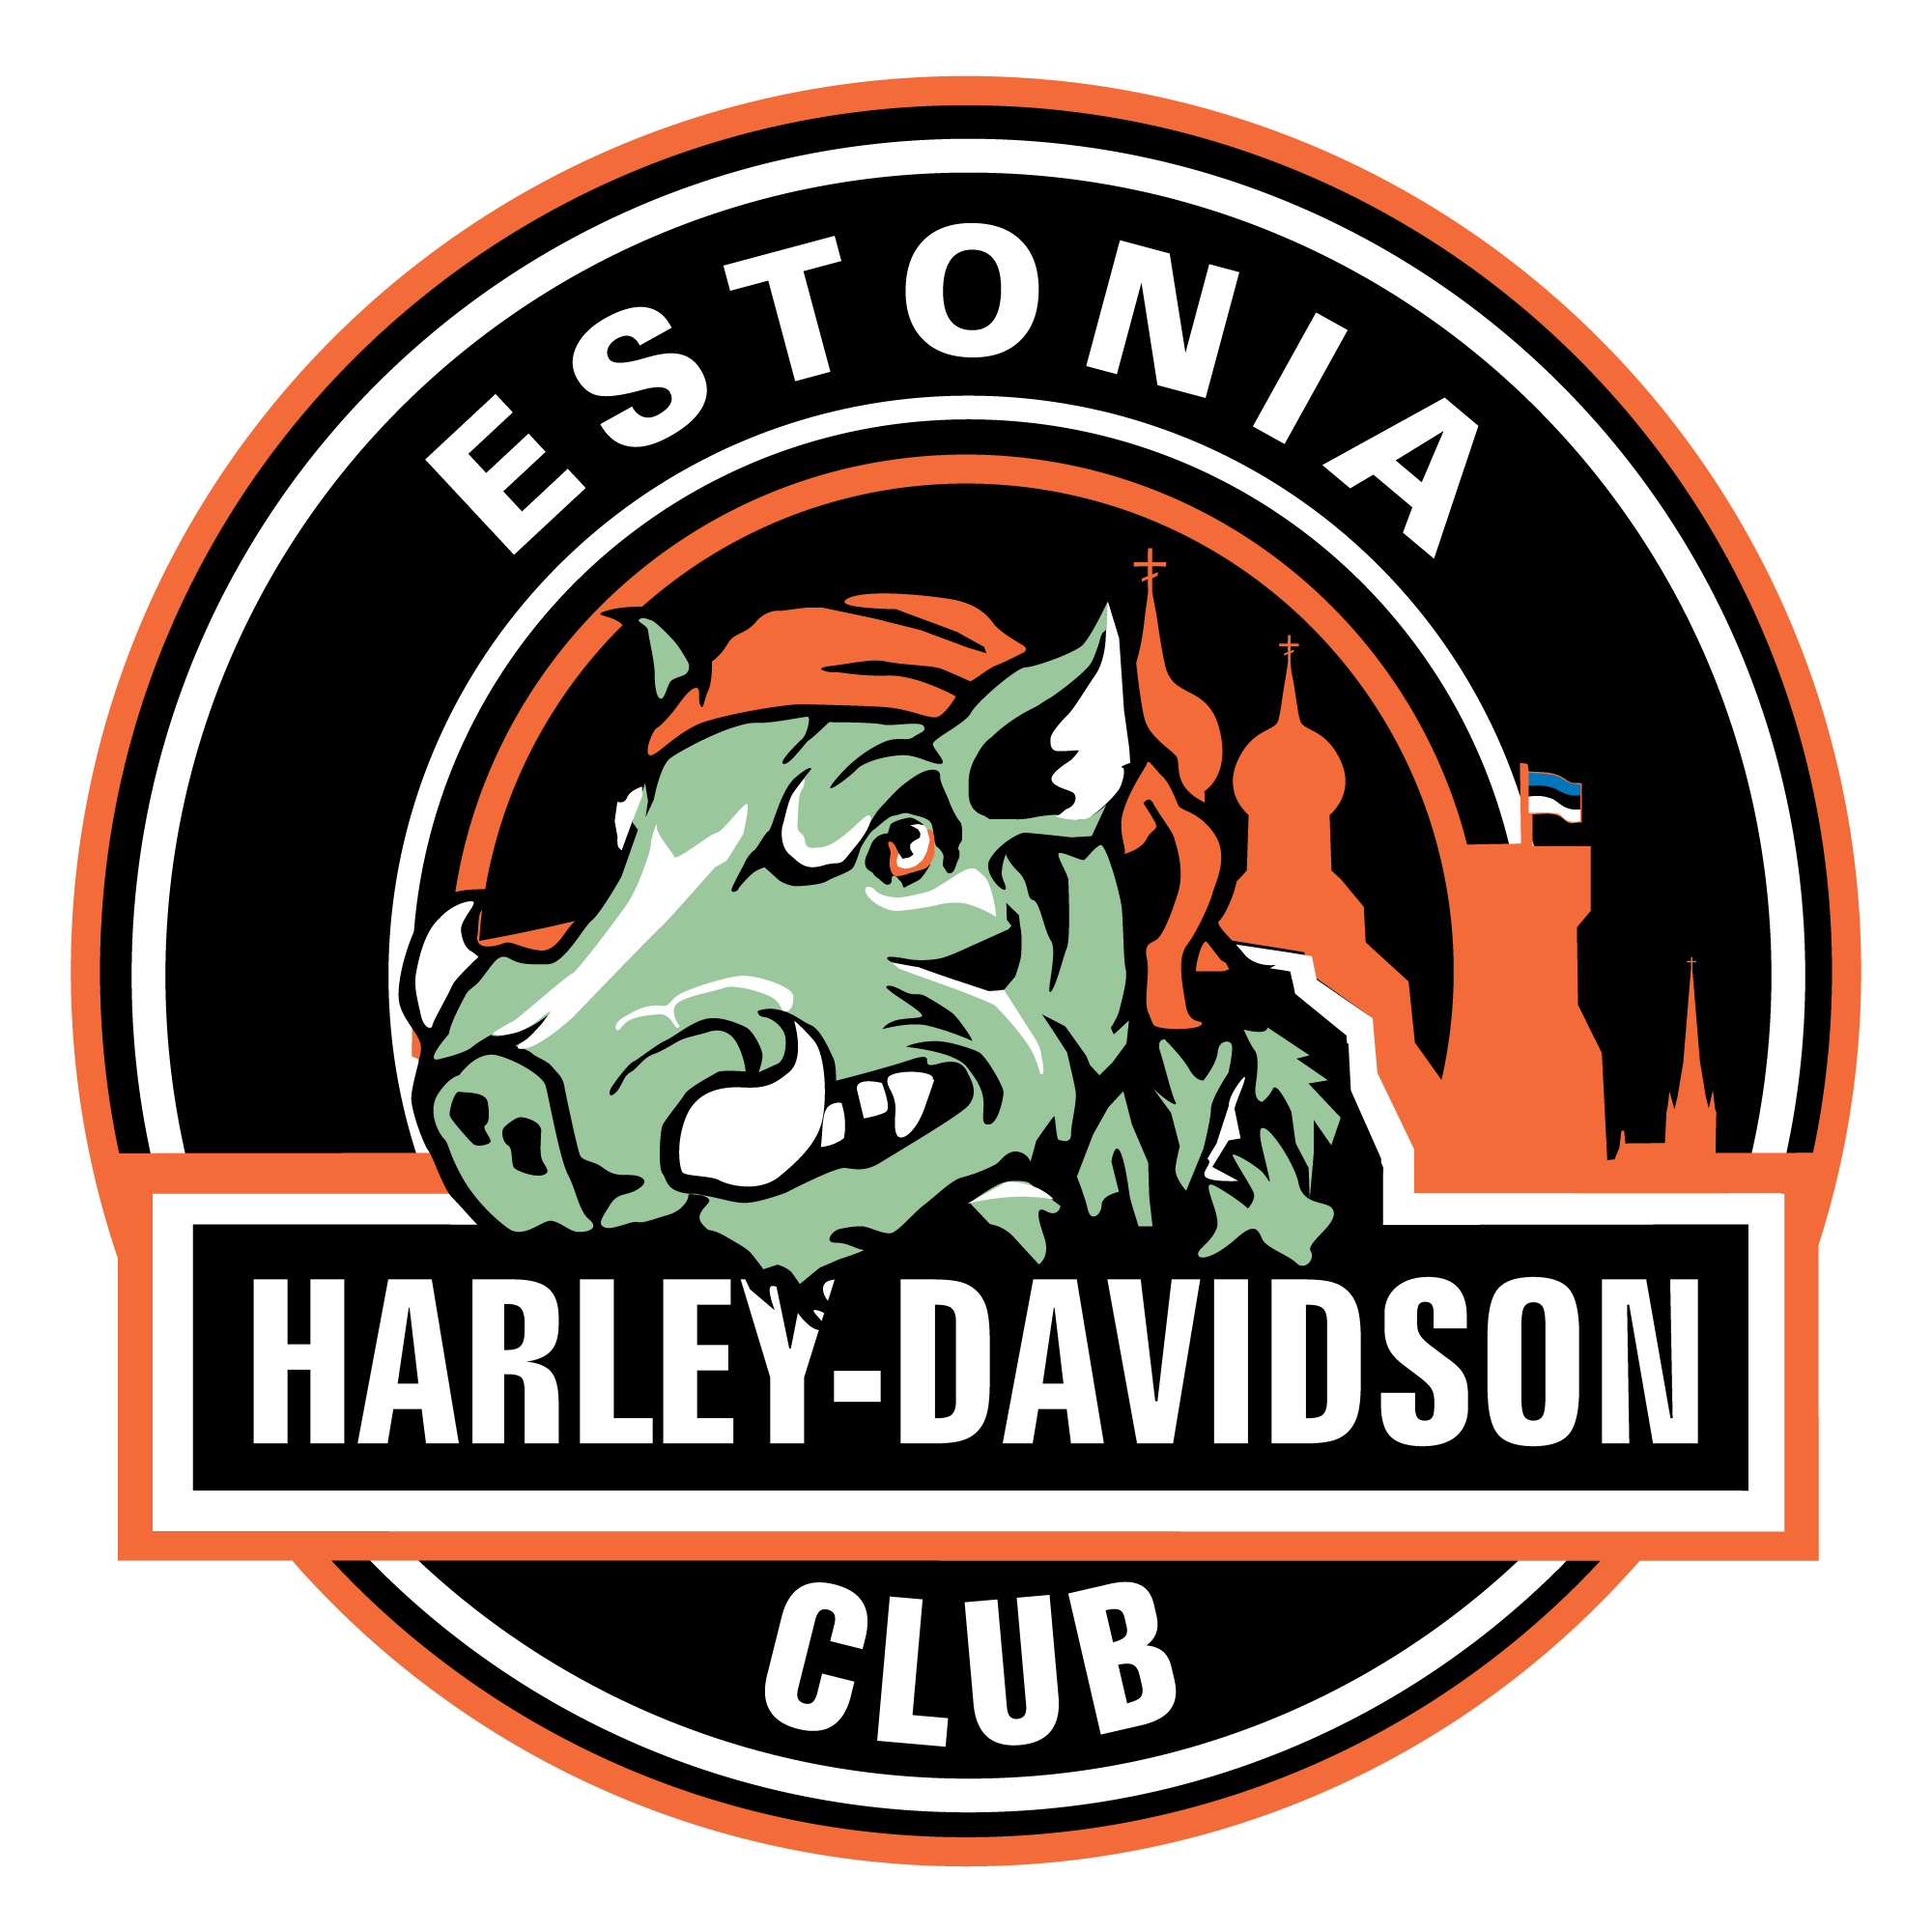 Harley Davidson Club Estonia